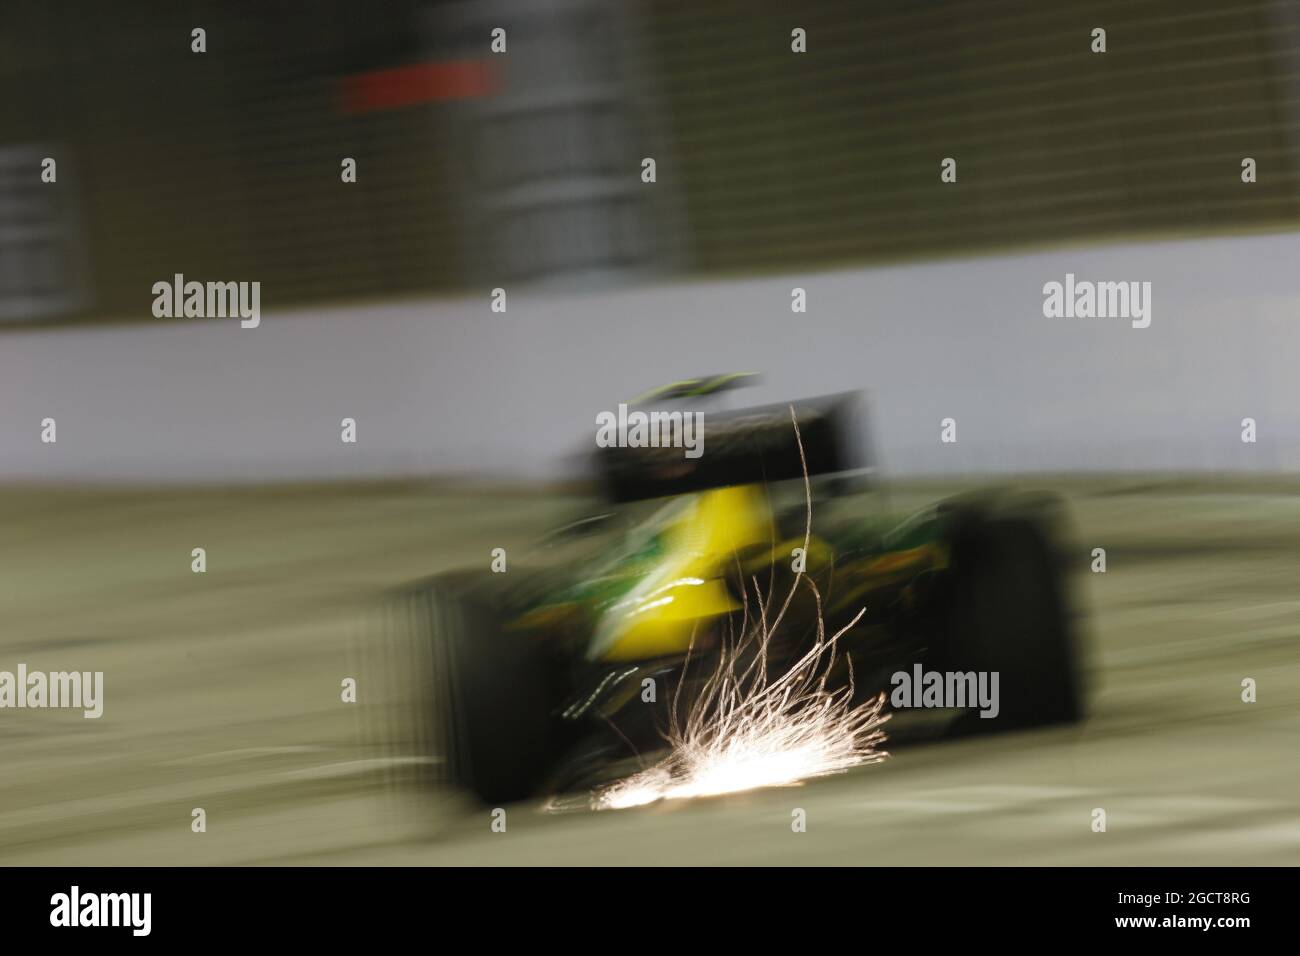 Giedo van der Garde (NLD) Caterham CT03. Gran Premio di Singapore, domenica 22 settembre 2013. Circuito Marina Bay Street, Singapore. Foto Stock